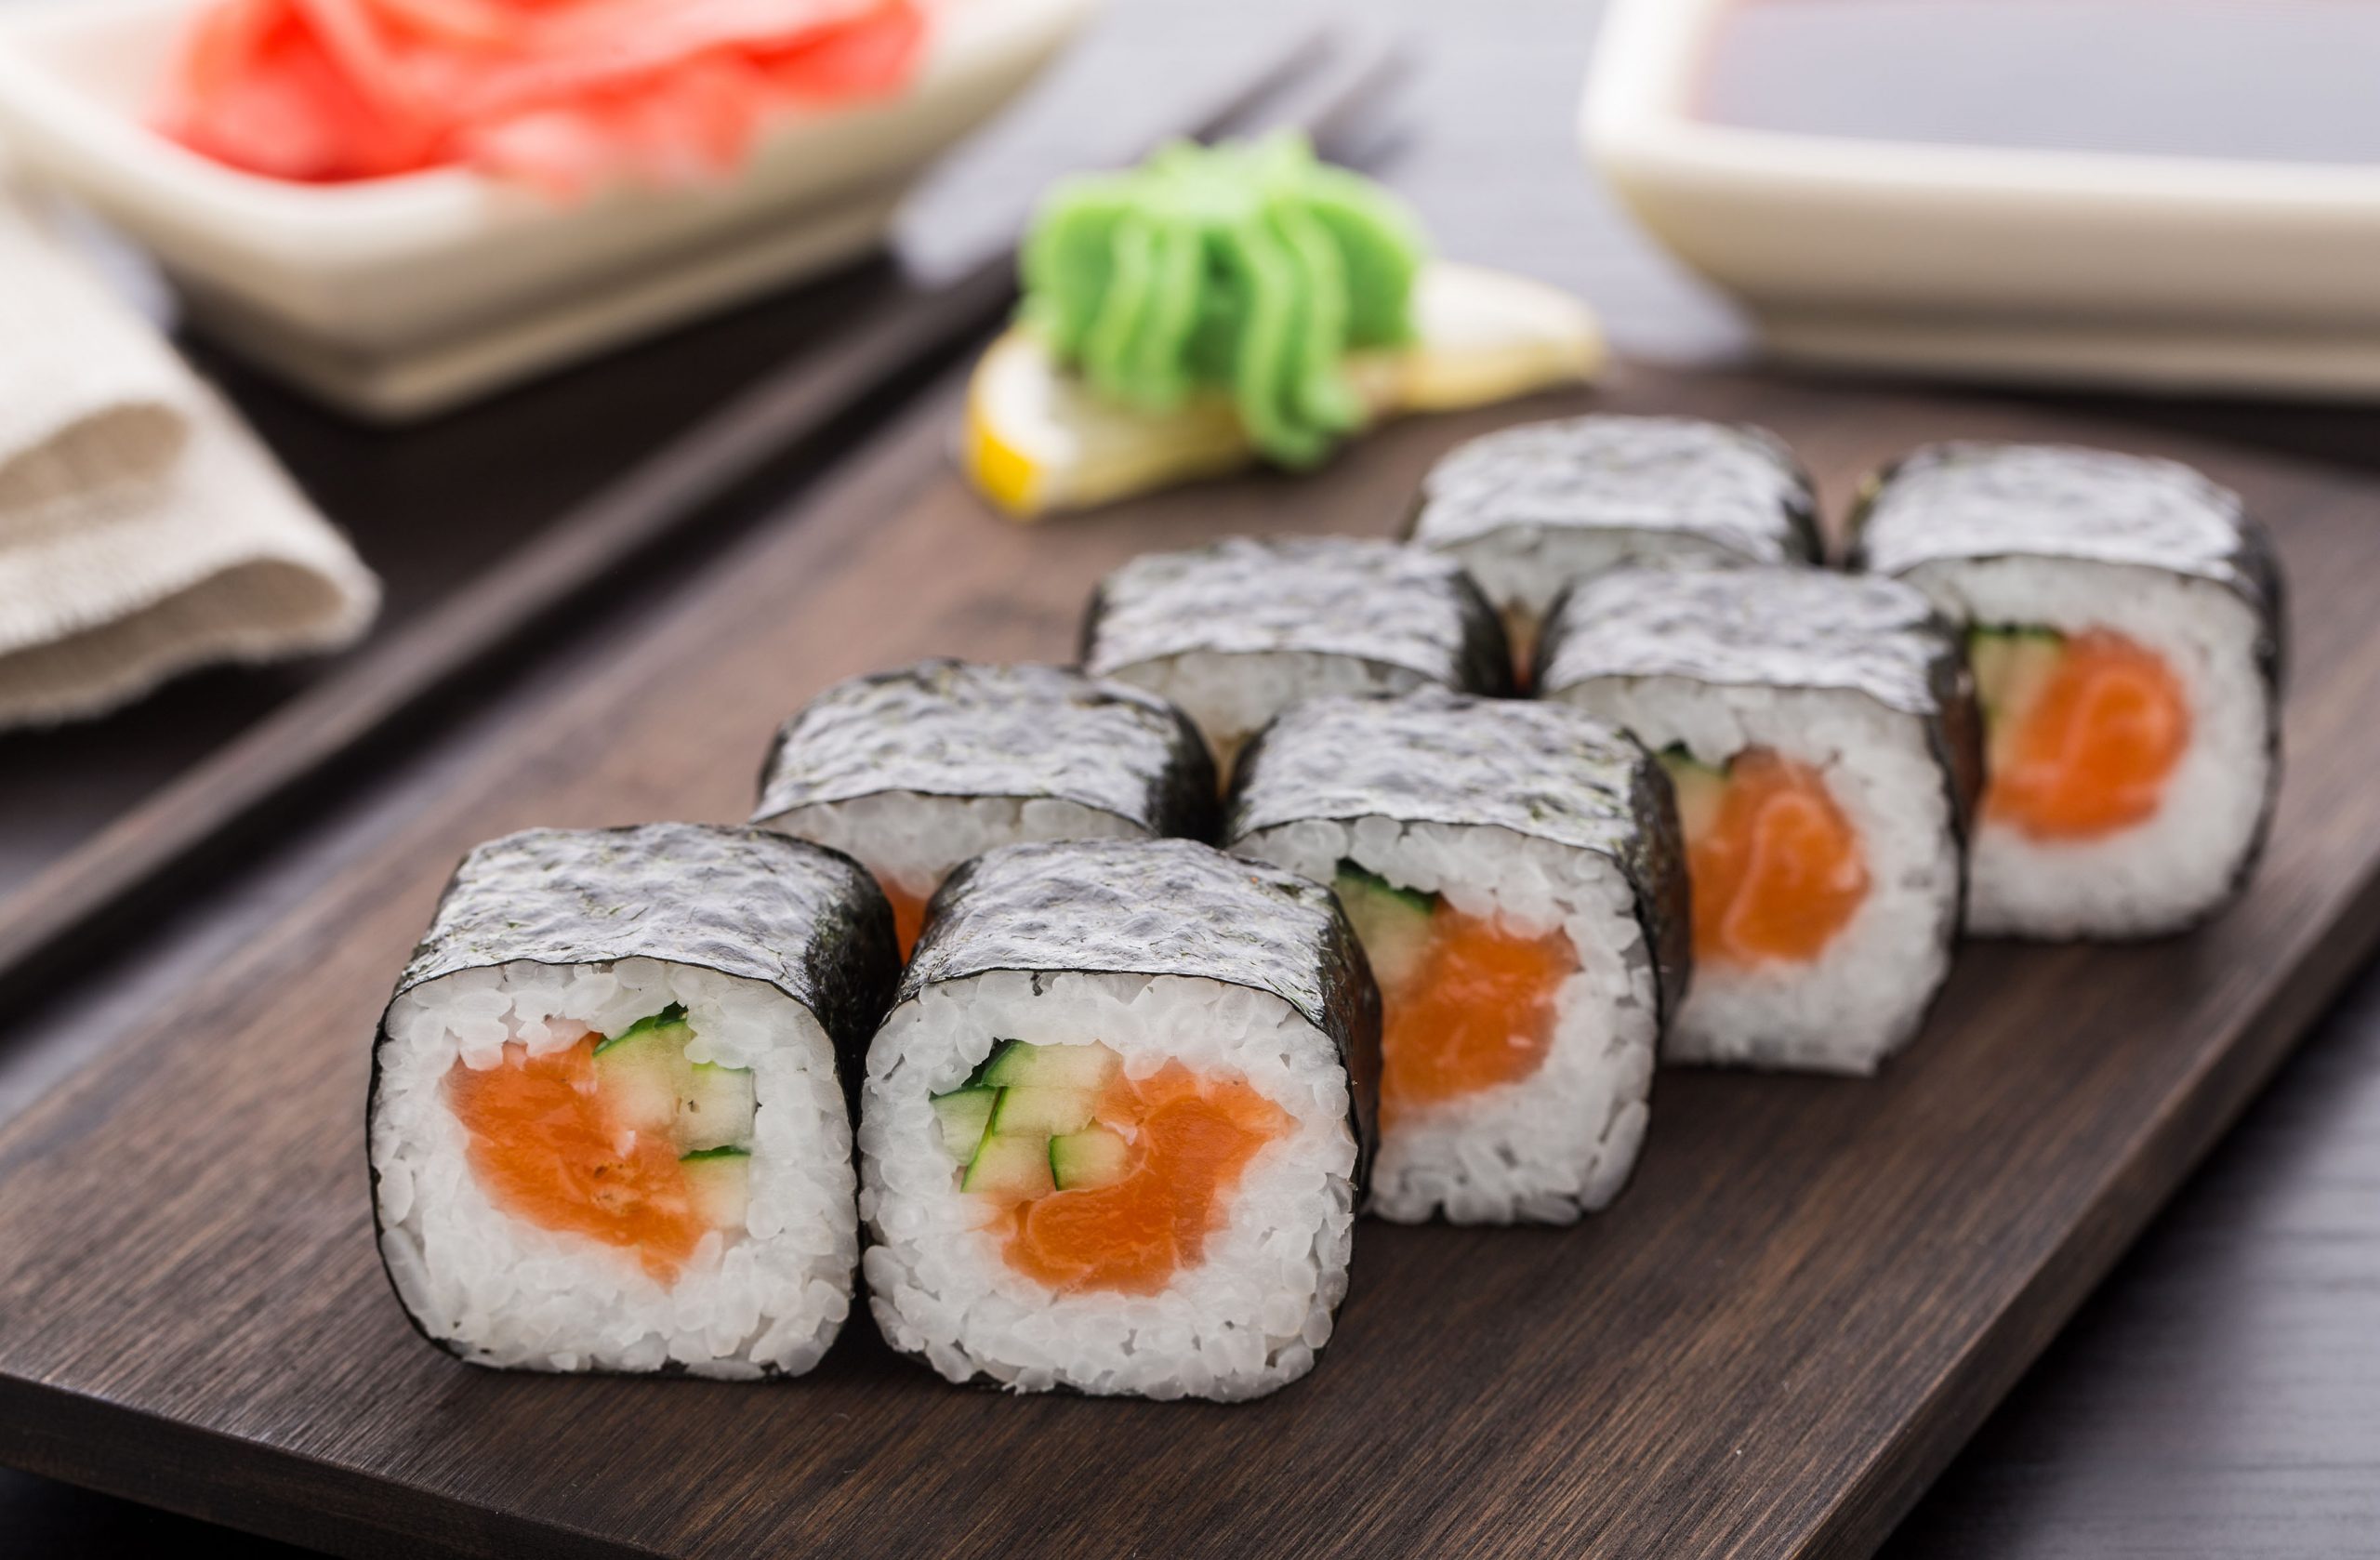 https://www.readersdigest.ca/wp-content/uploads/2011/11/japanese-sushi-rolls-scaled.jpg